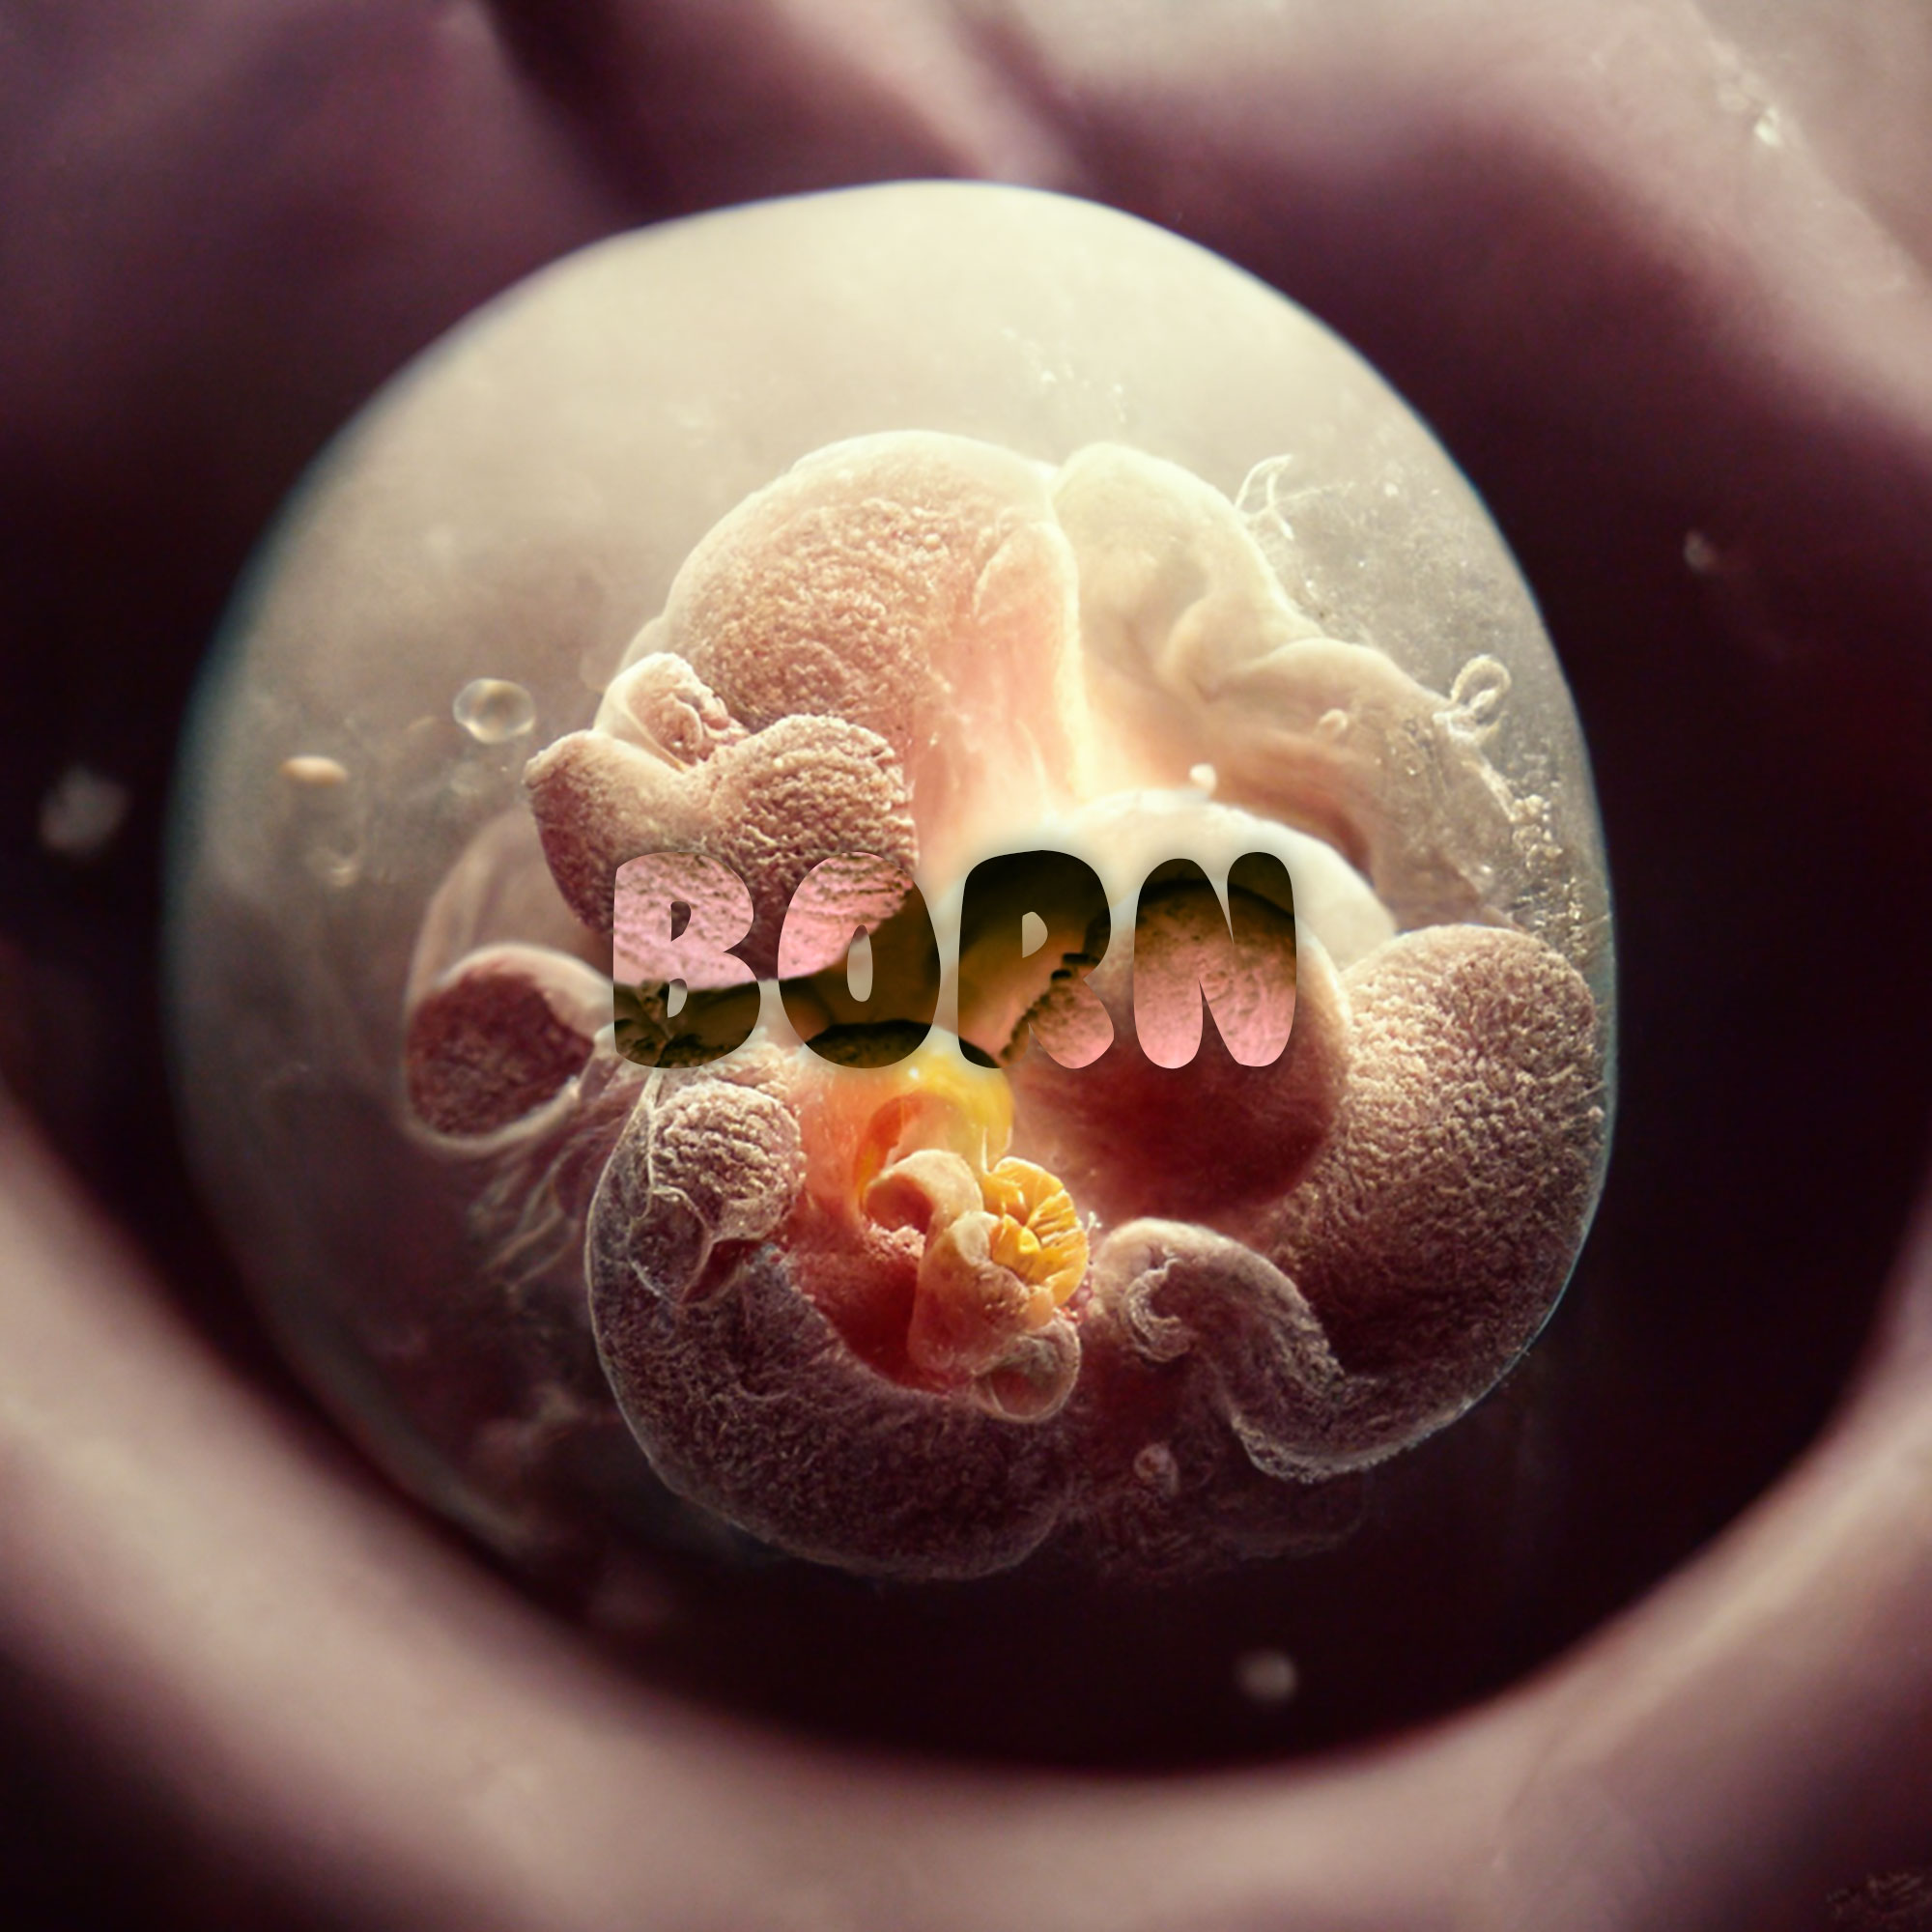 BORN - the drama of life before birth